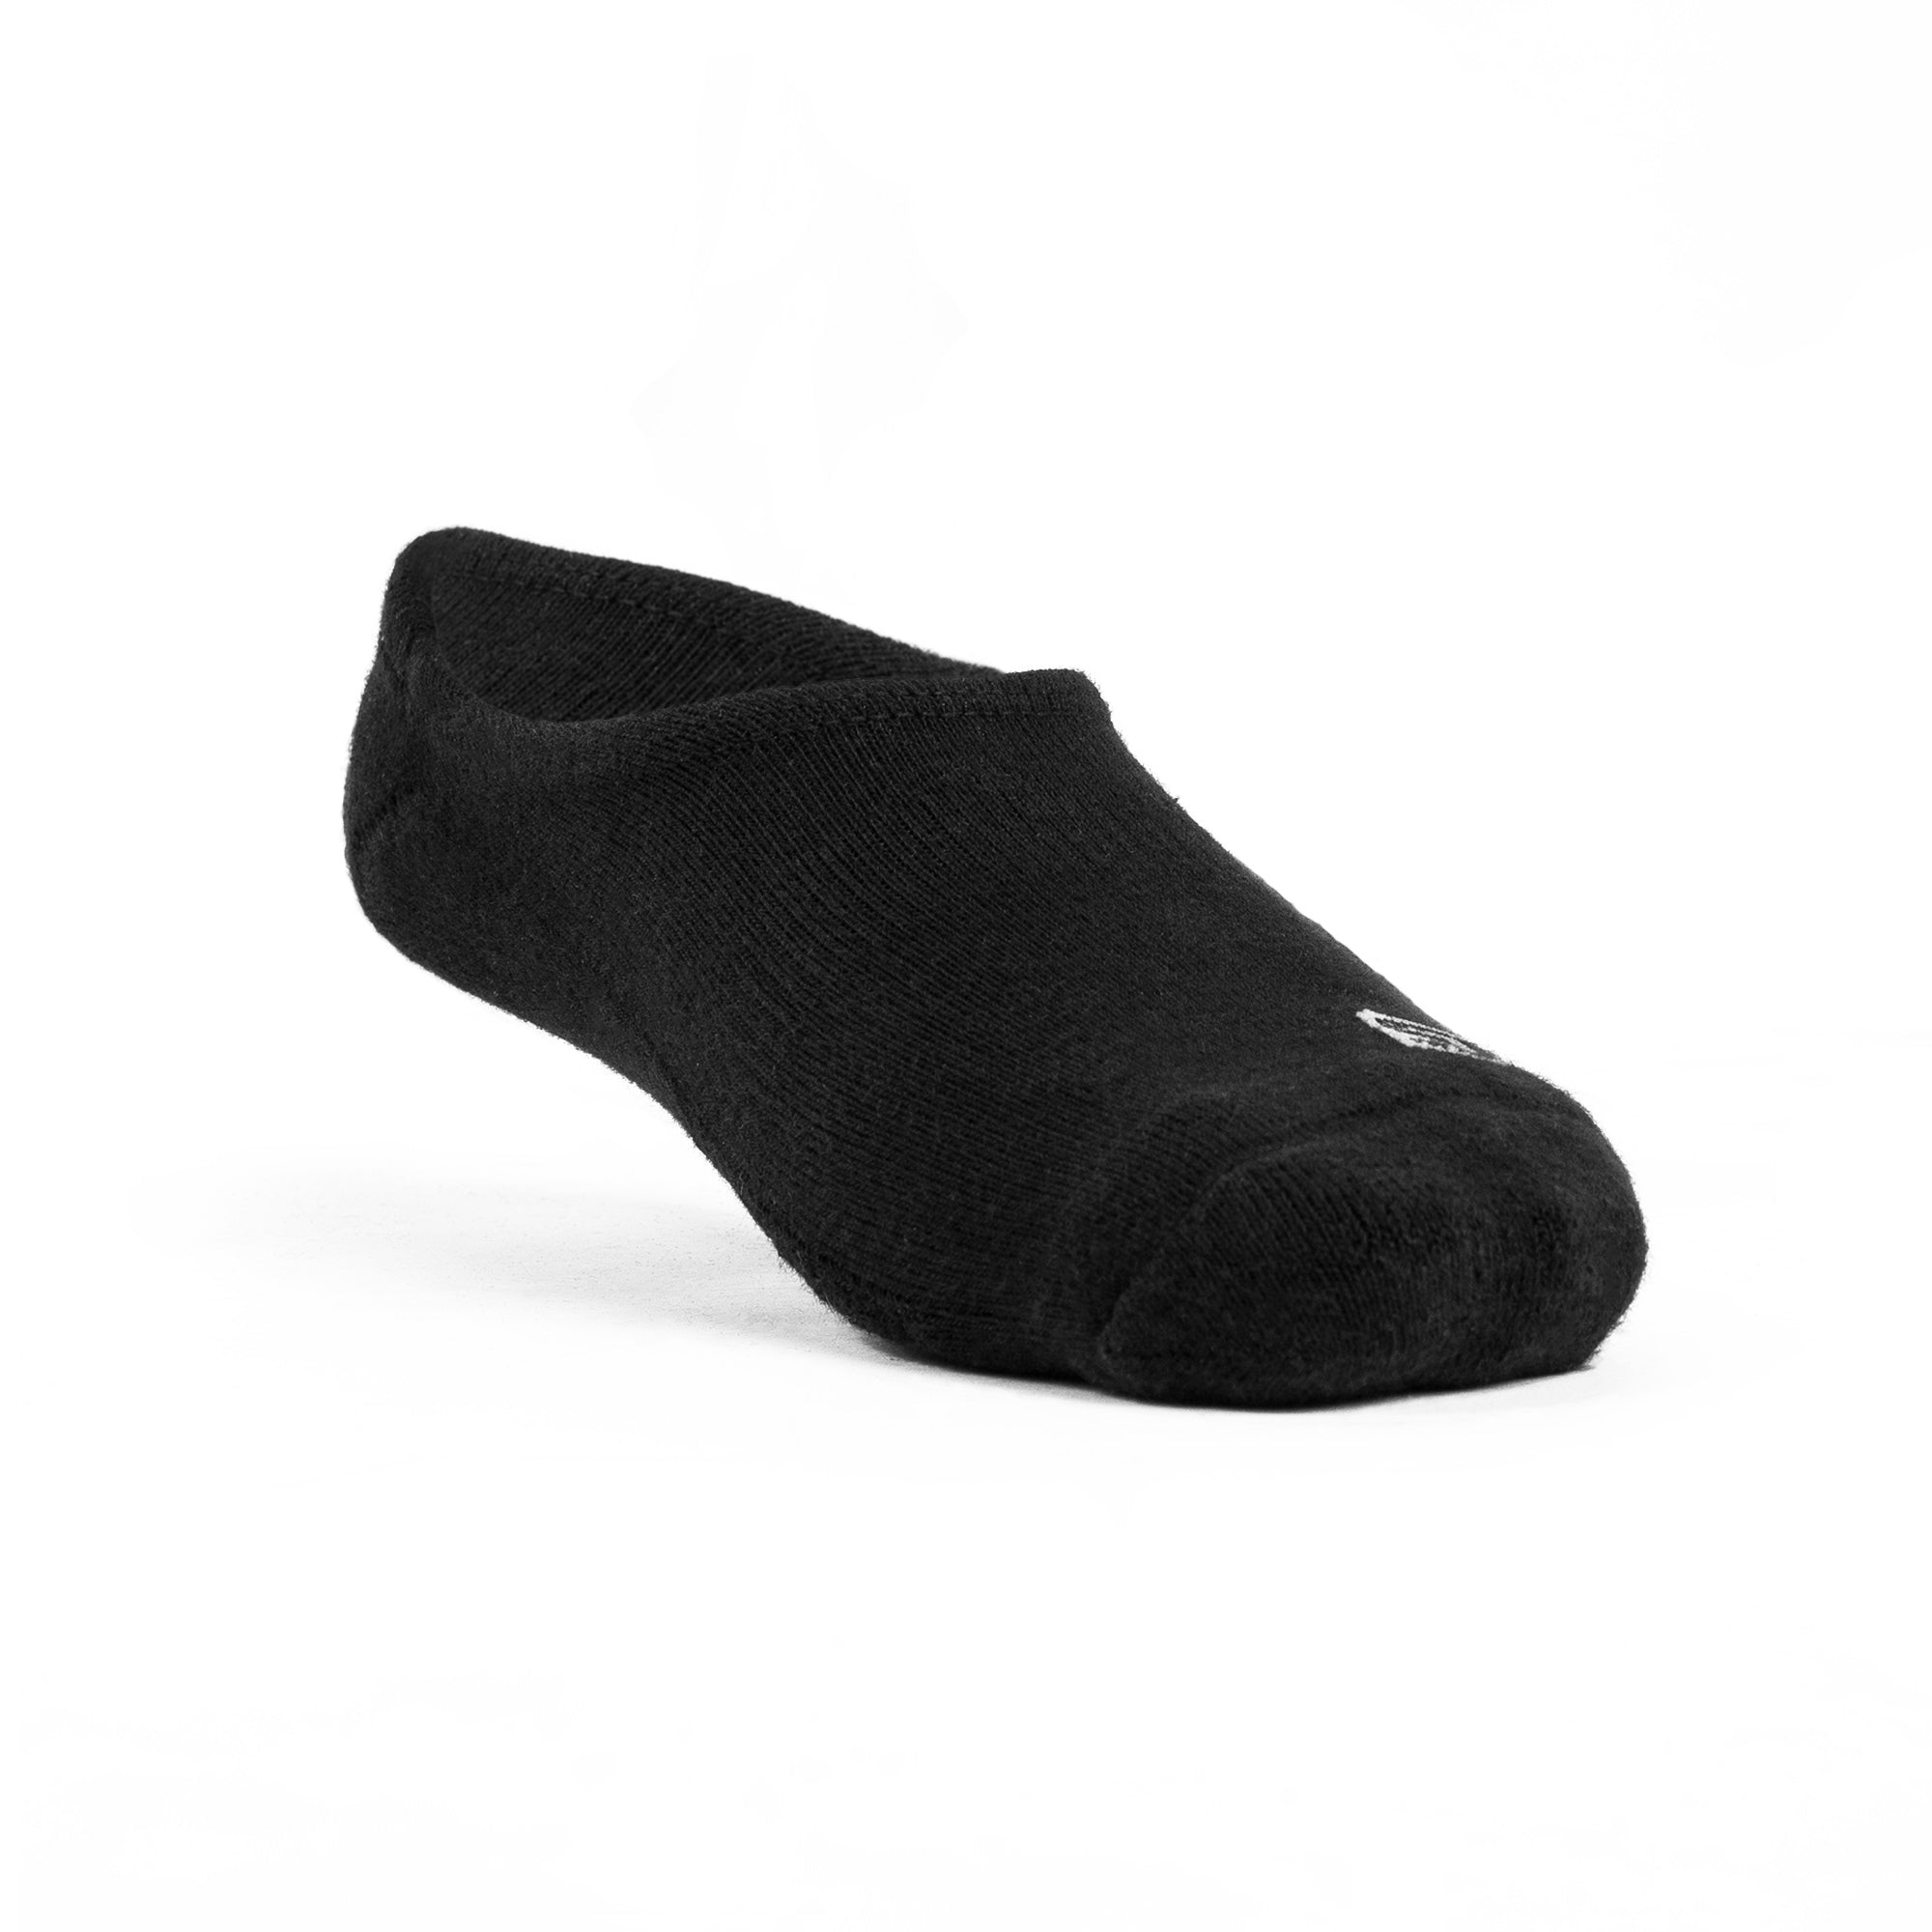 Athletic No-Show Socks – Black - Rise